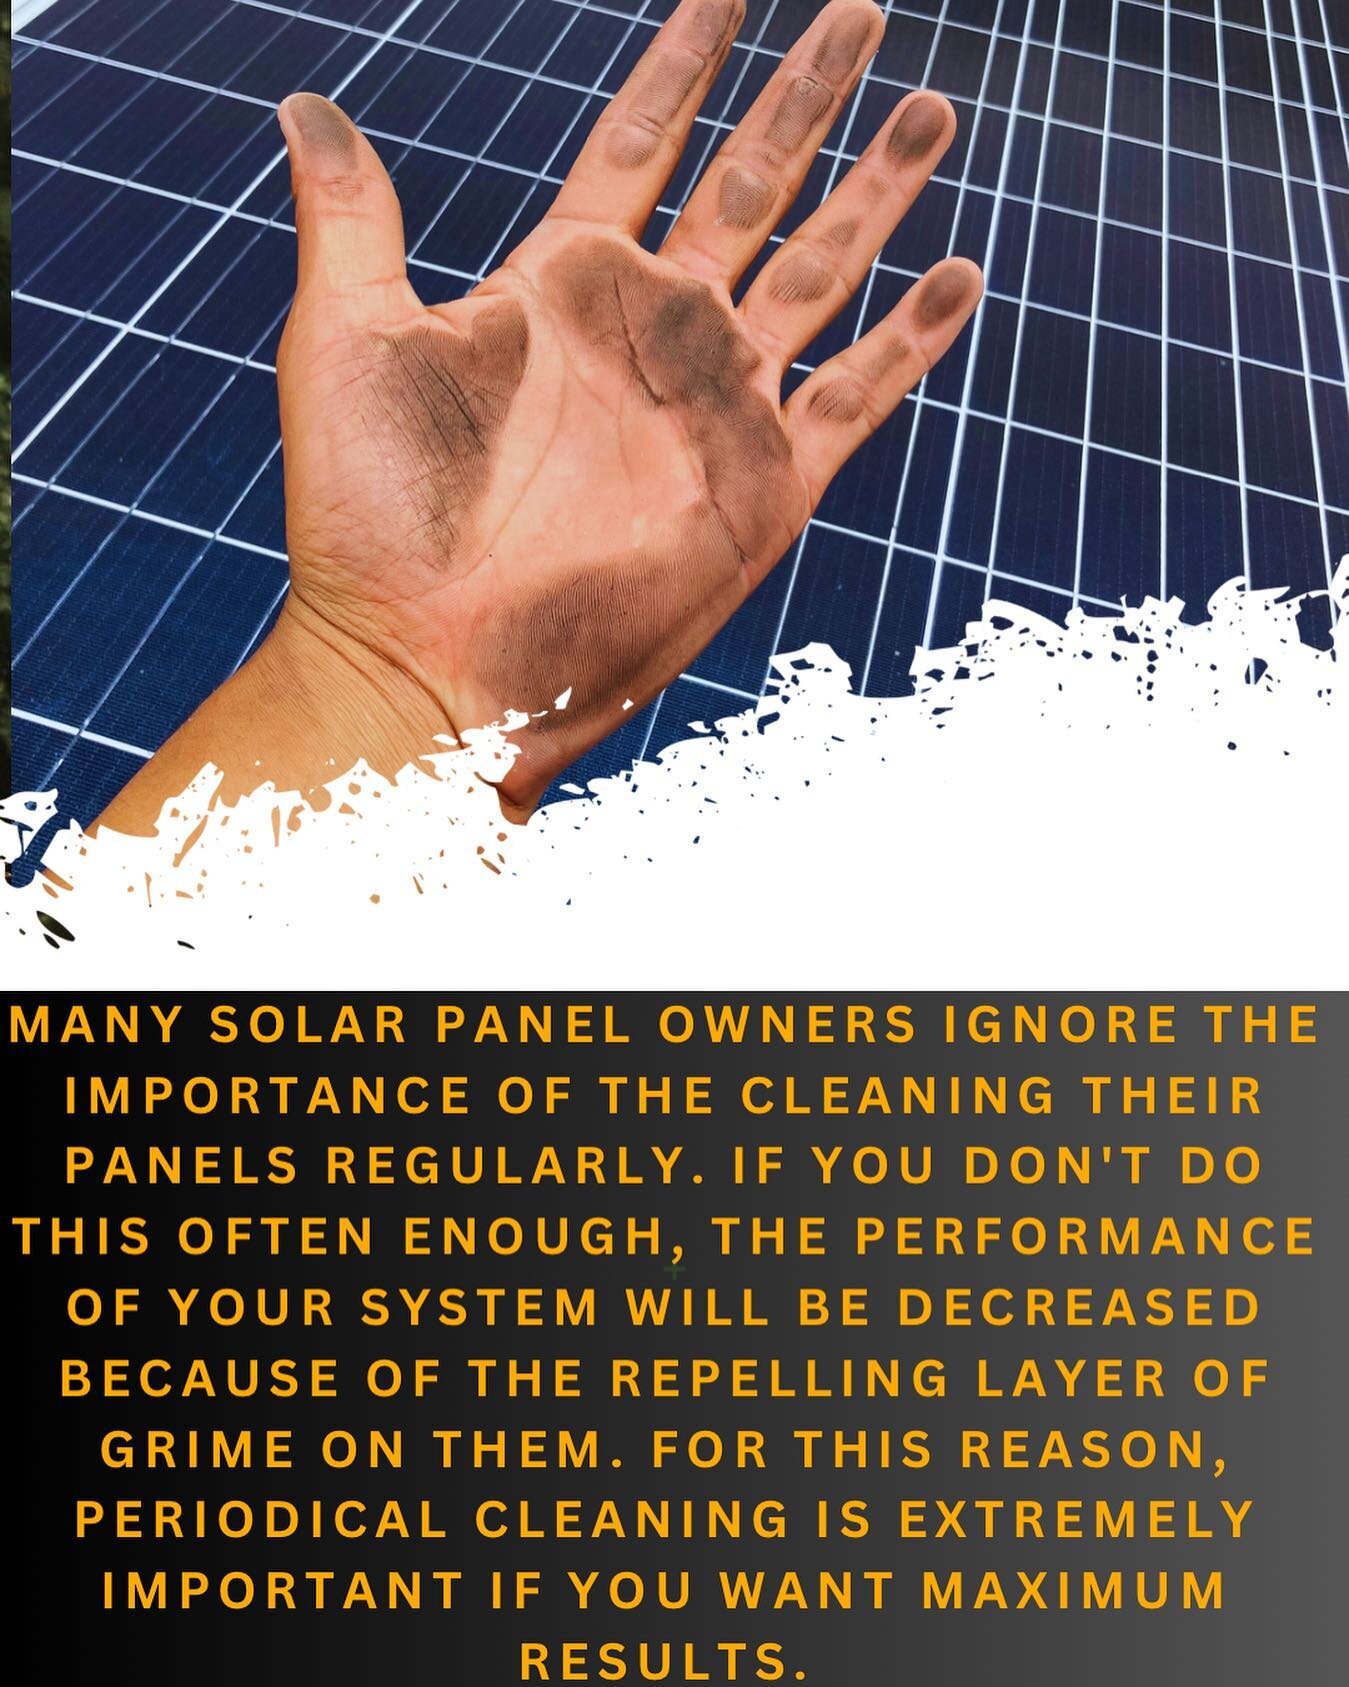 #solarenergy #solarpanelcleaning #solar #solarhoustontx #solarhouston #solartexas